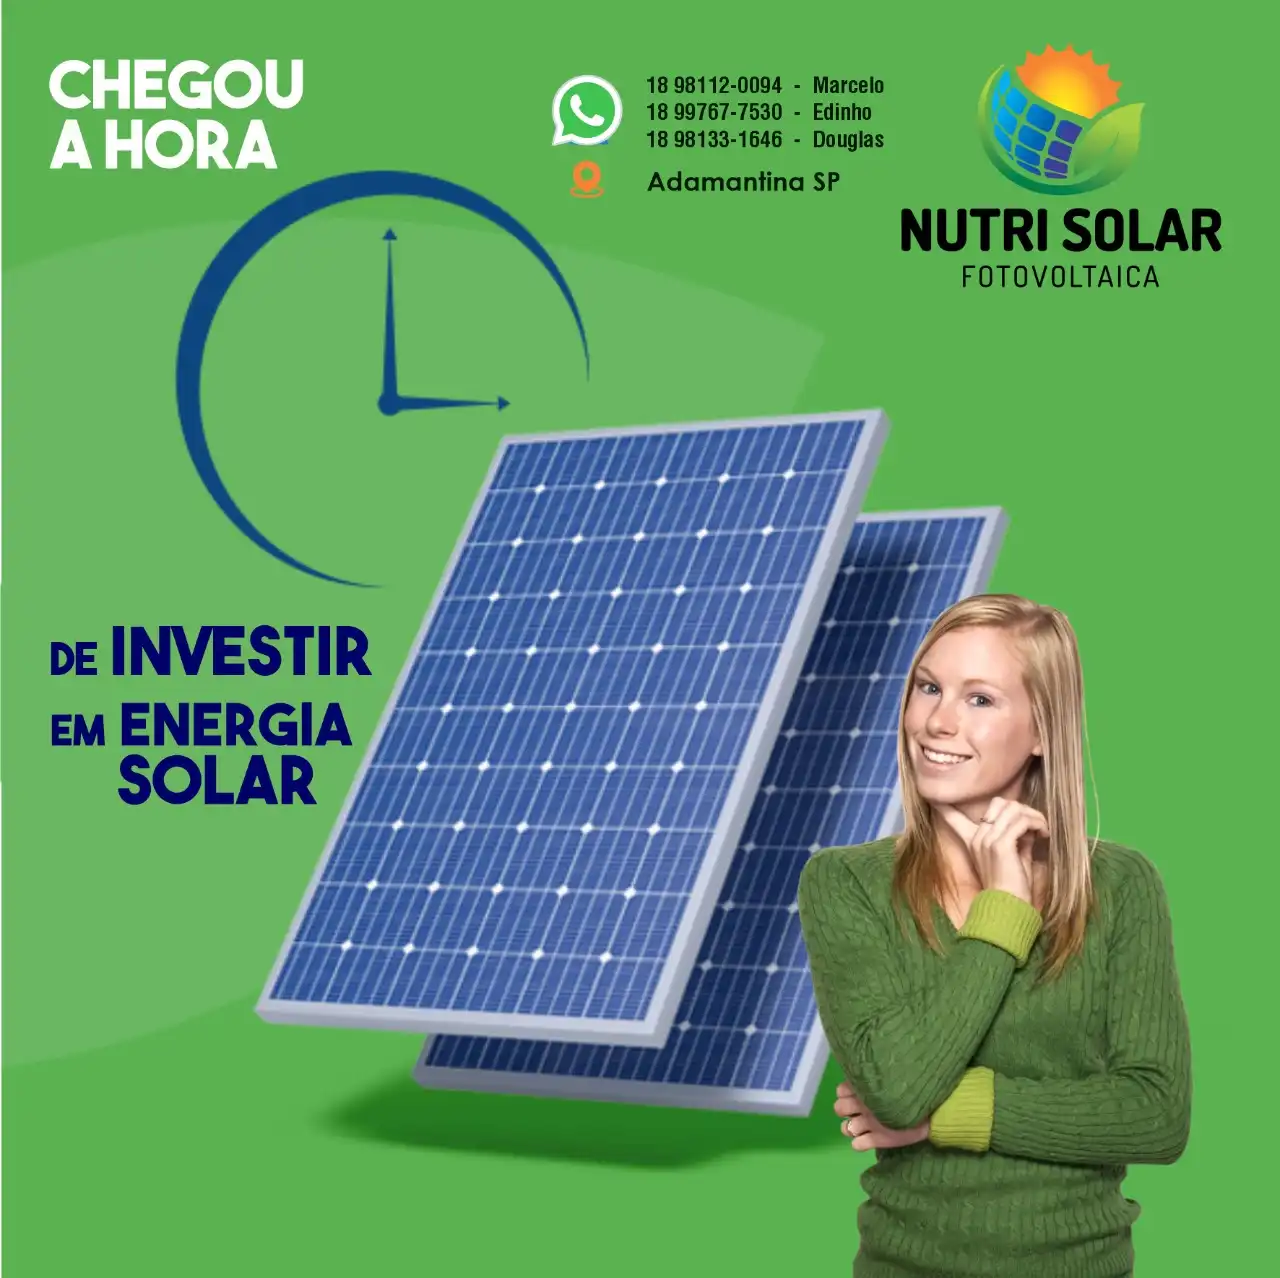 
Propaganda Post Investimento em Energia Solar



